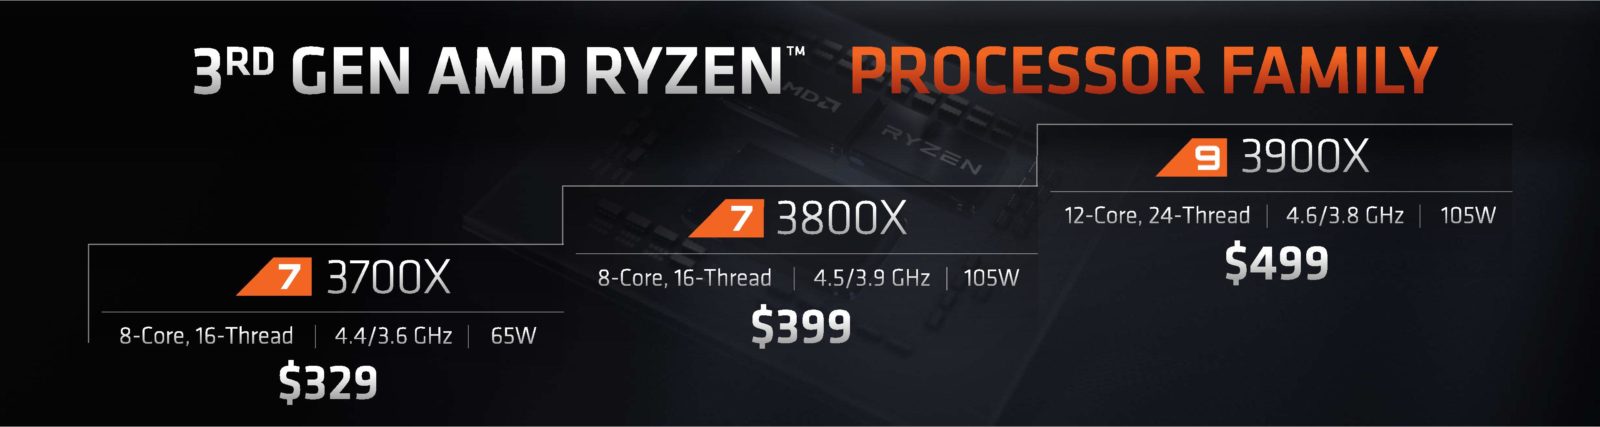 AMD-Ryzen-3000-series-family-pricing-1600x427.jpg